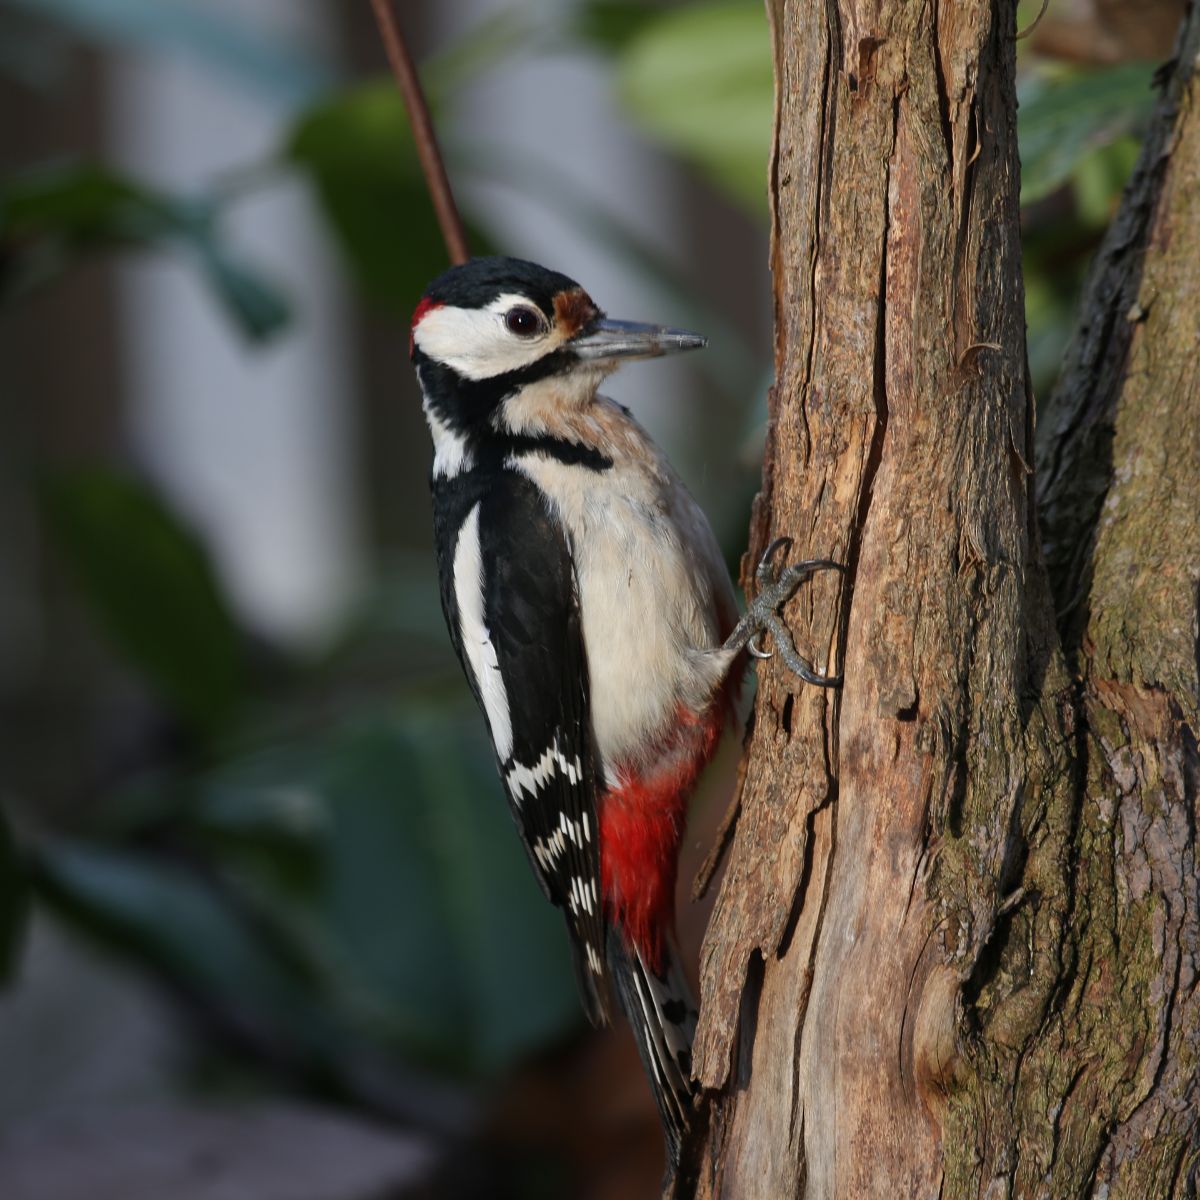 A beautiful woodpecker pecking on a tree.